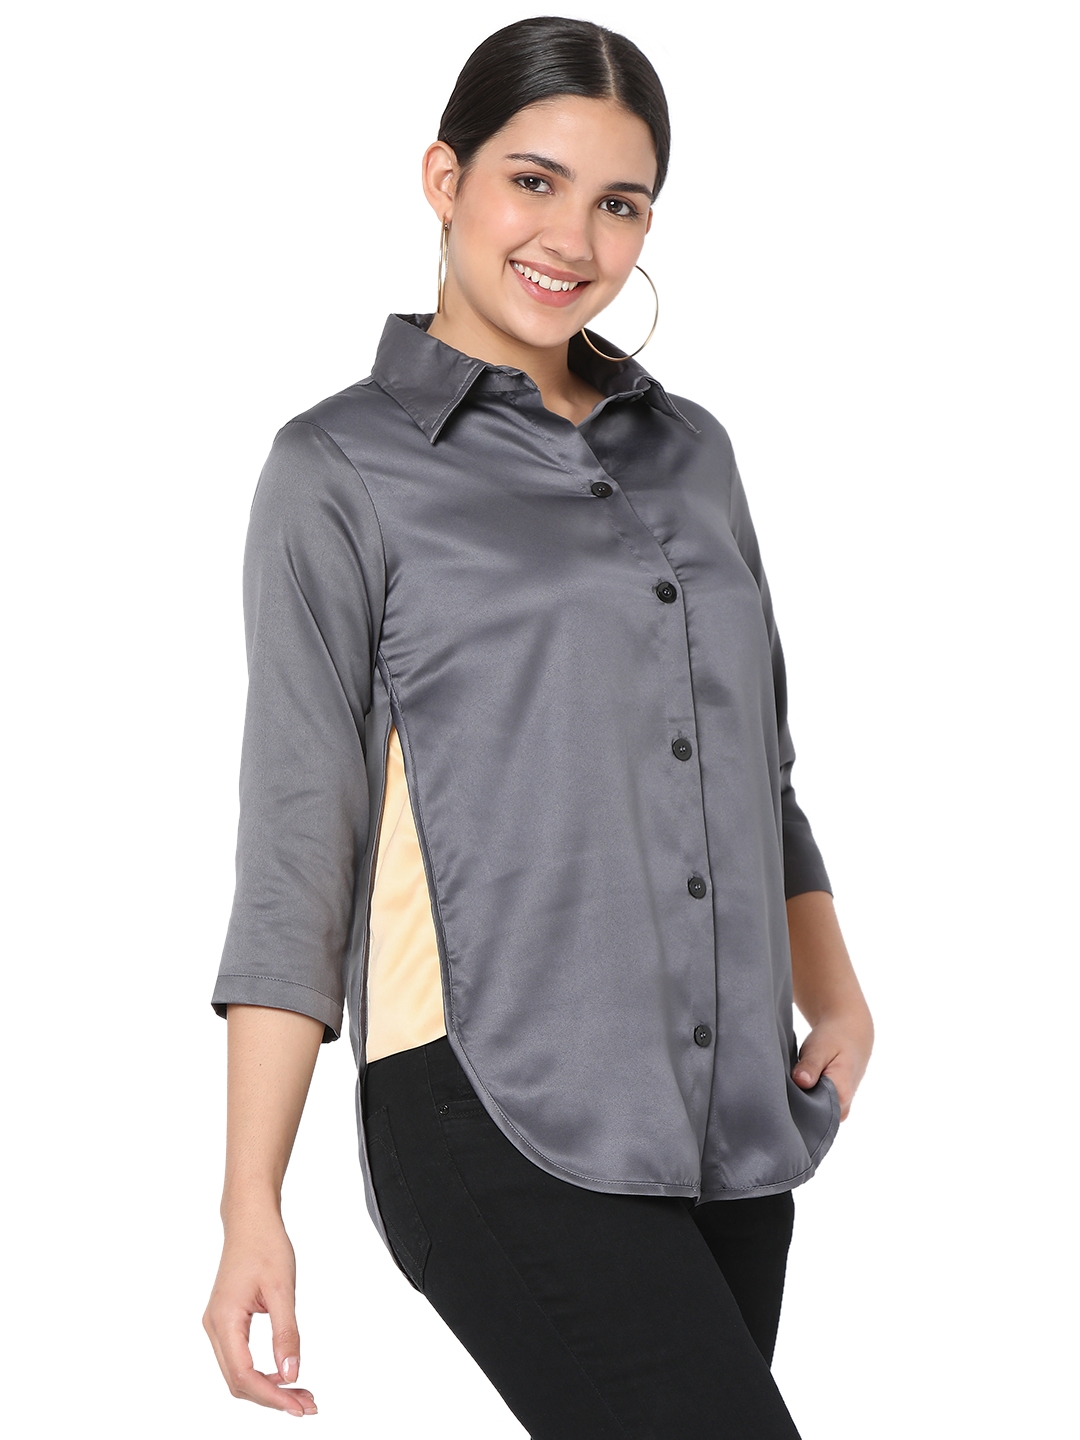 Smarty Pants | Smarty Pants women's silk satin grey color apple cut formal shirt. 2